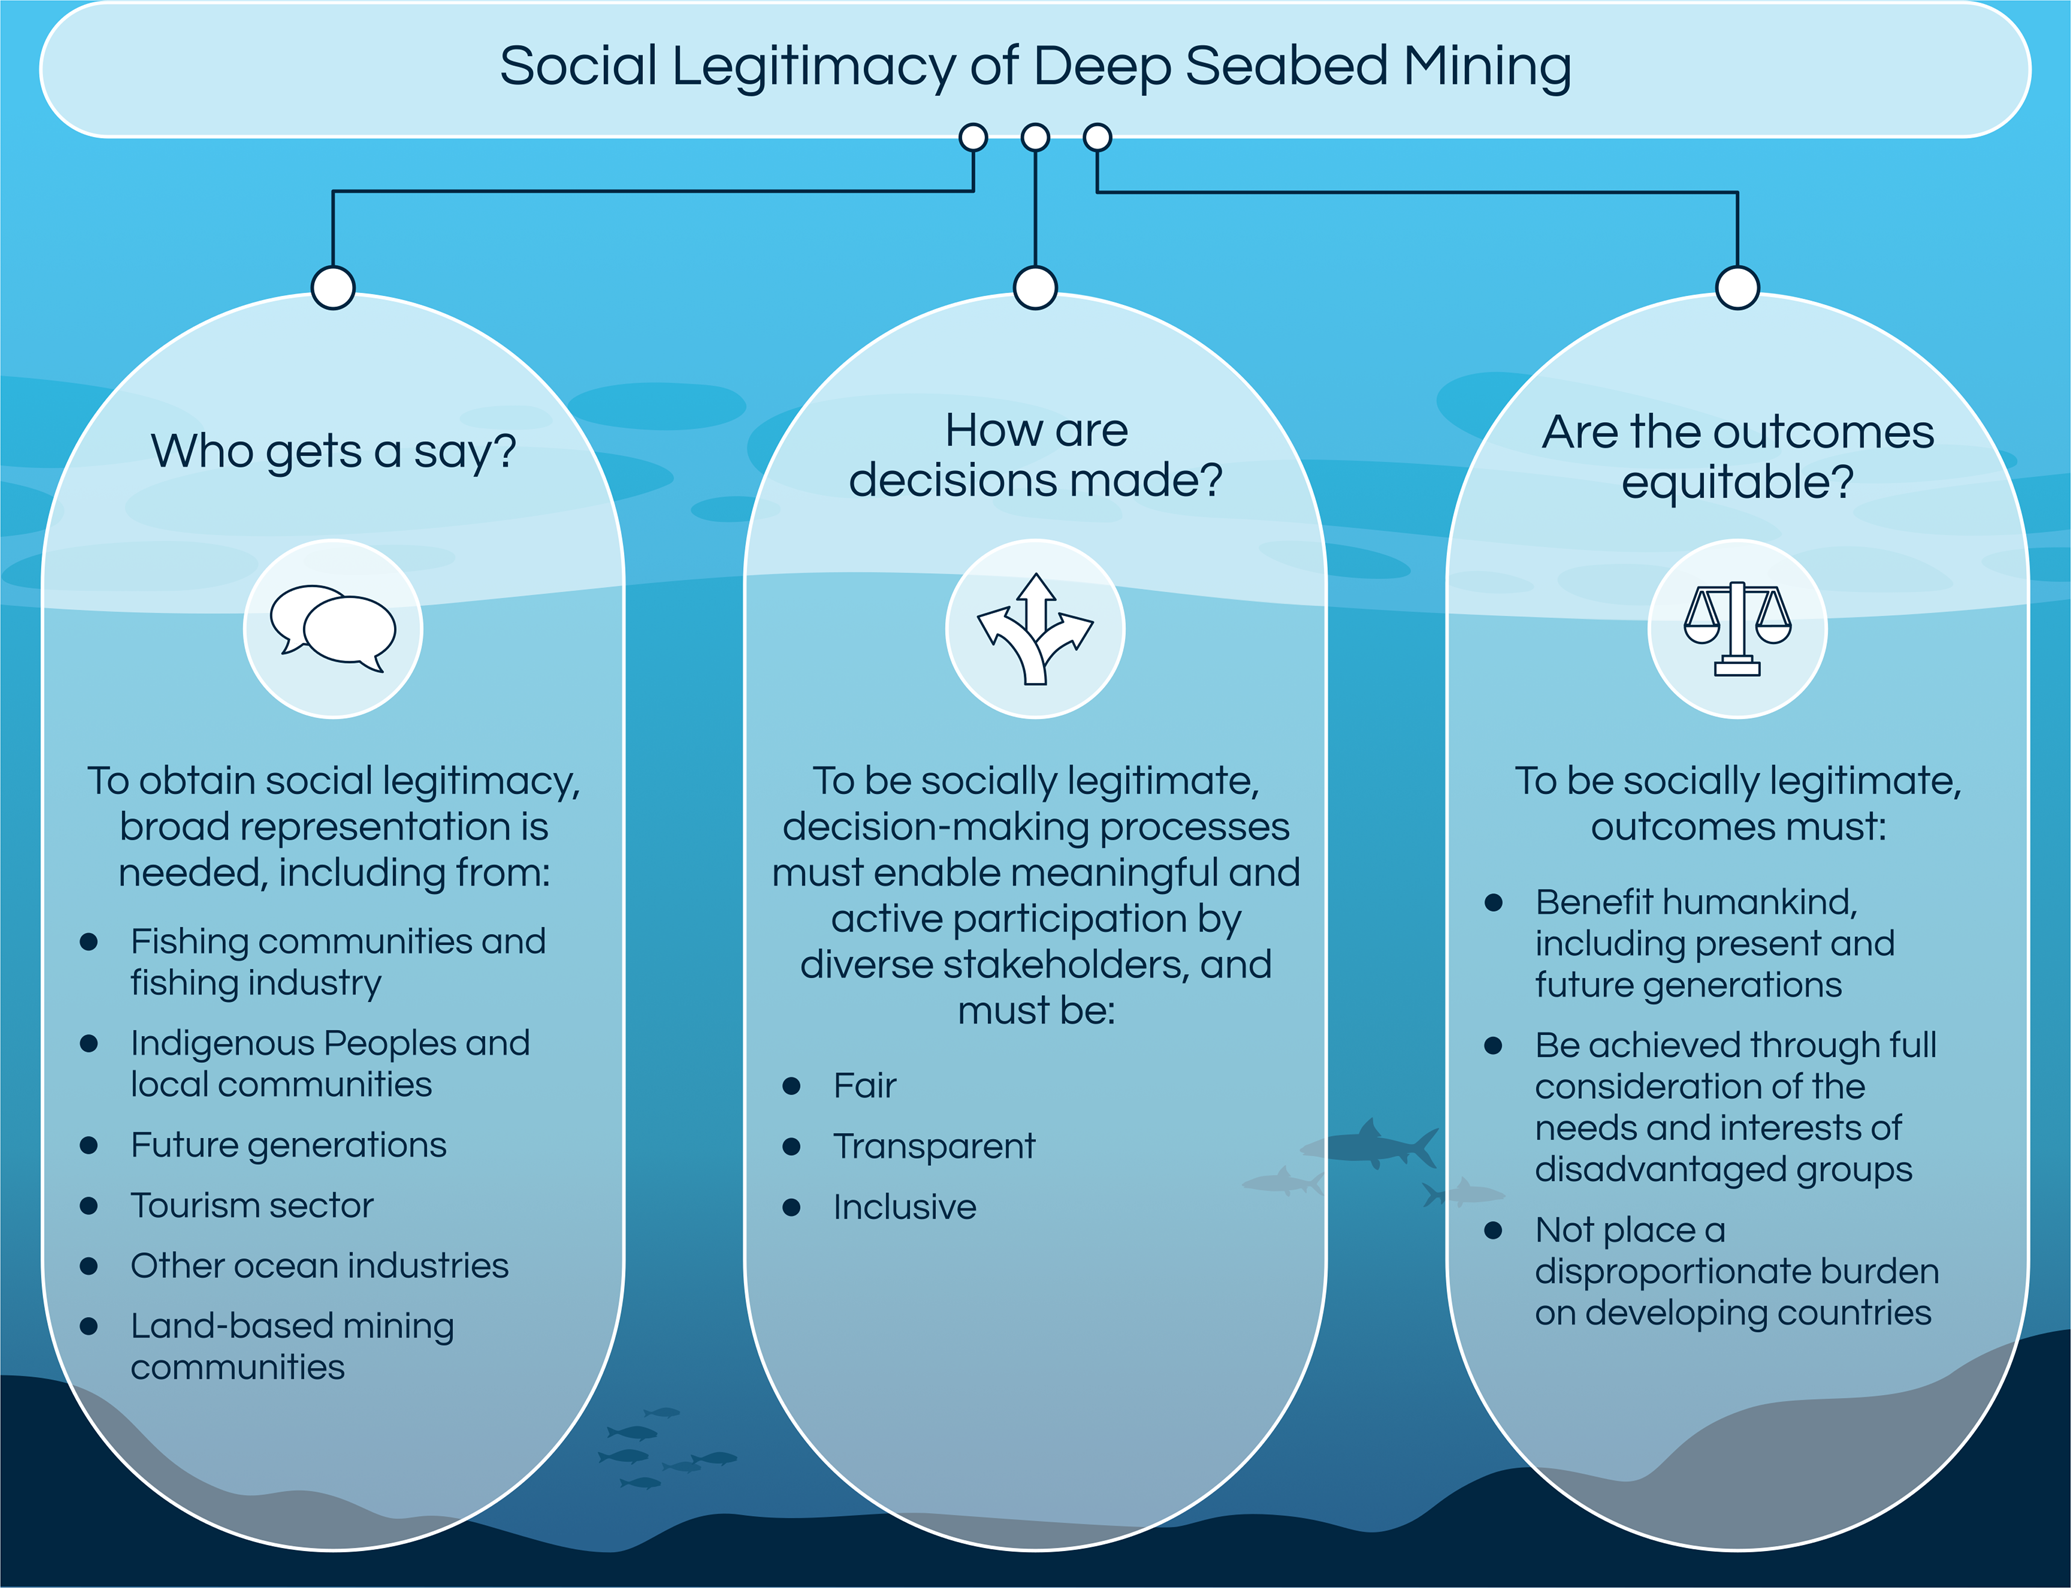 Deep seabed mining lacks social legitimacy